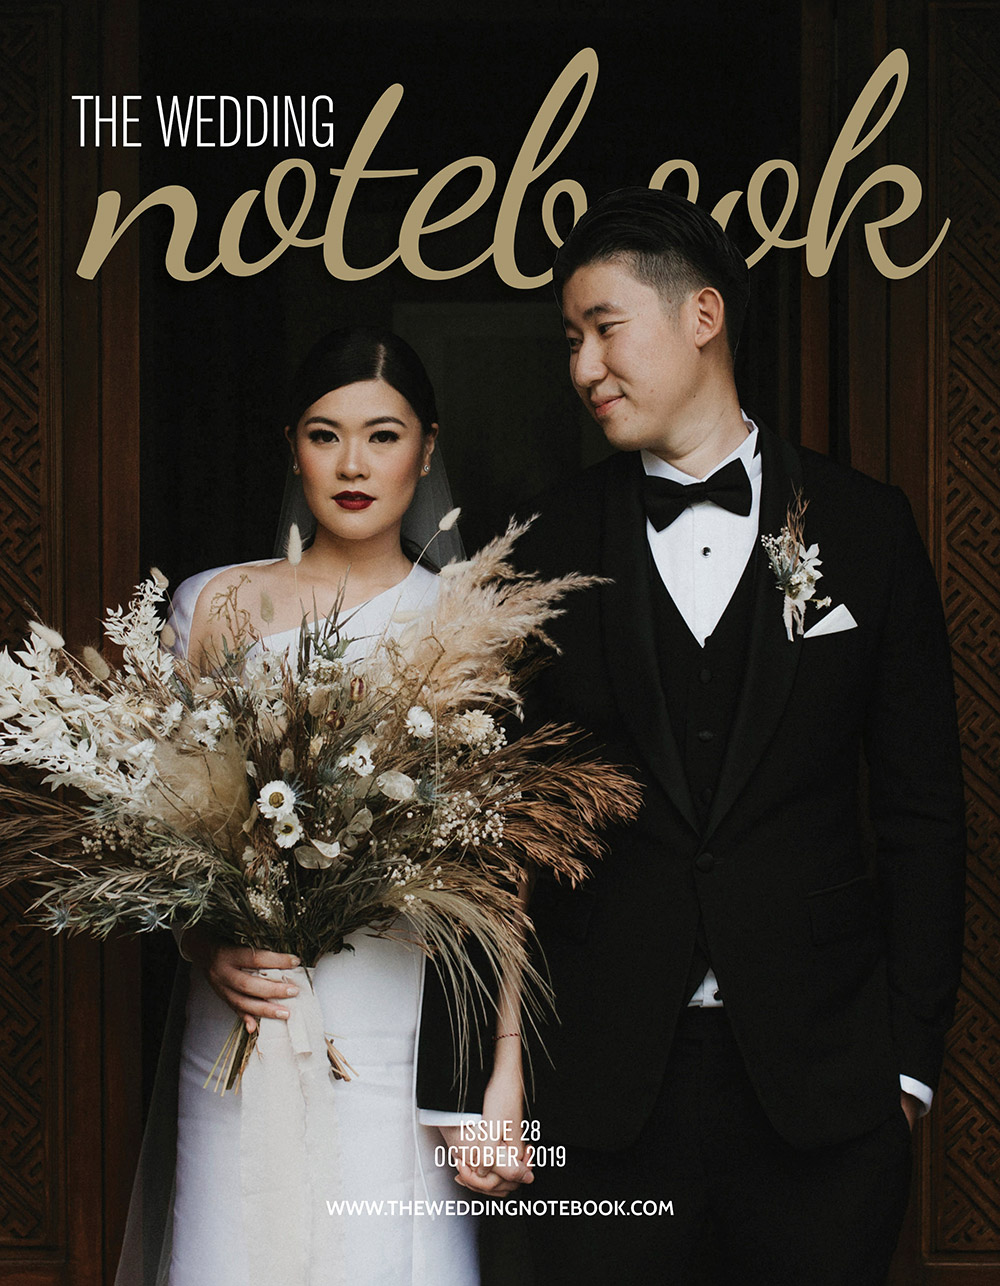 The Wedding Notebook magazine issue 28